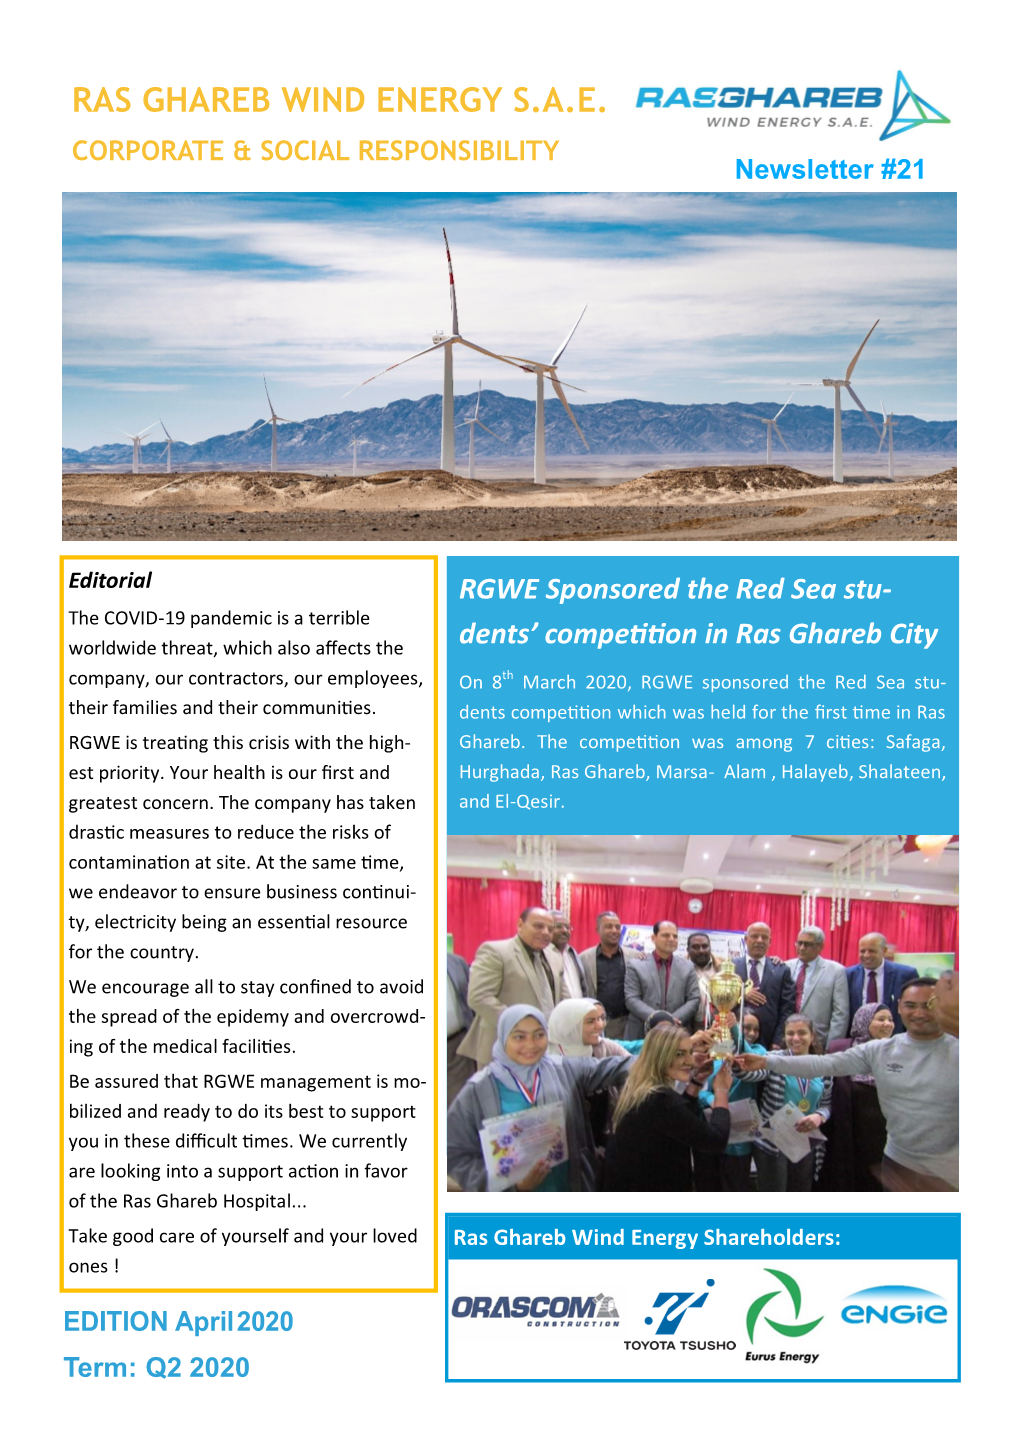 April 19, 2020 Ras Ghareb Wind Energy